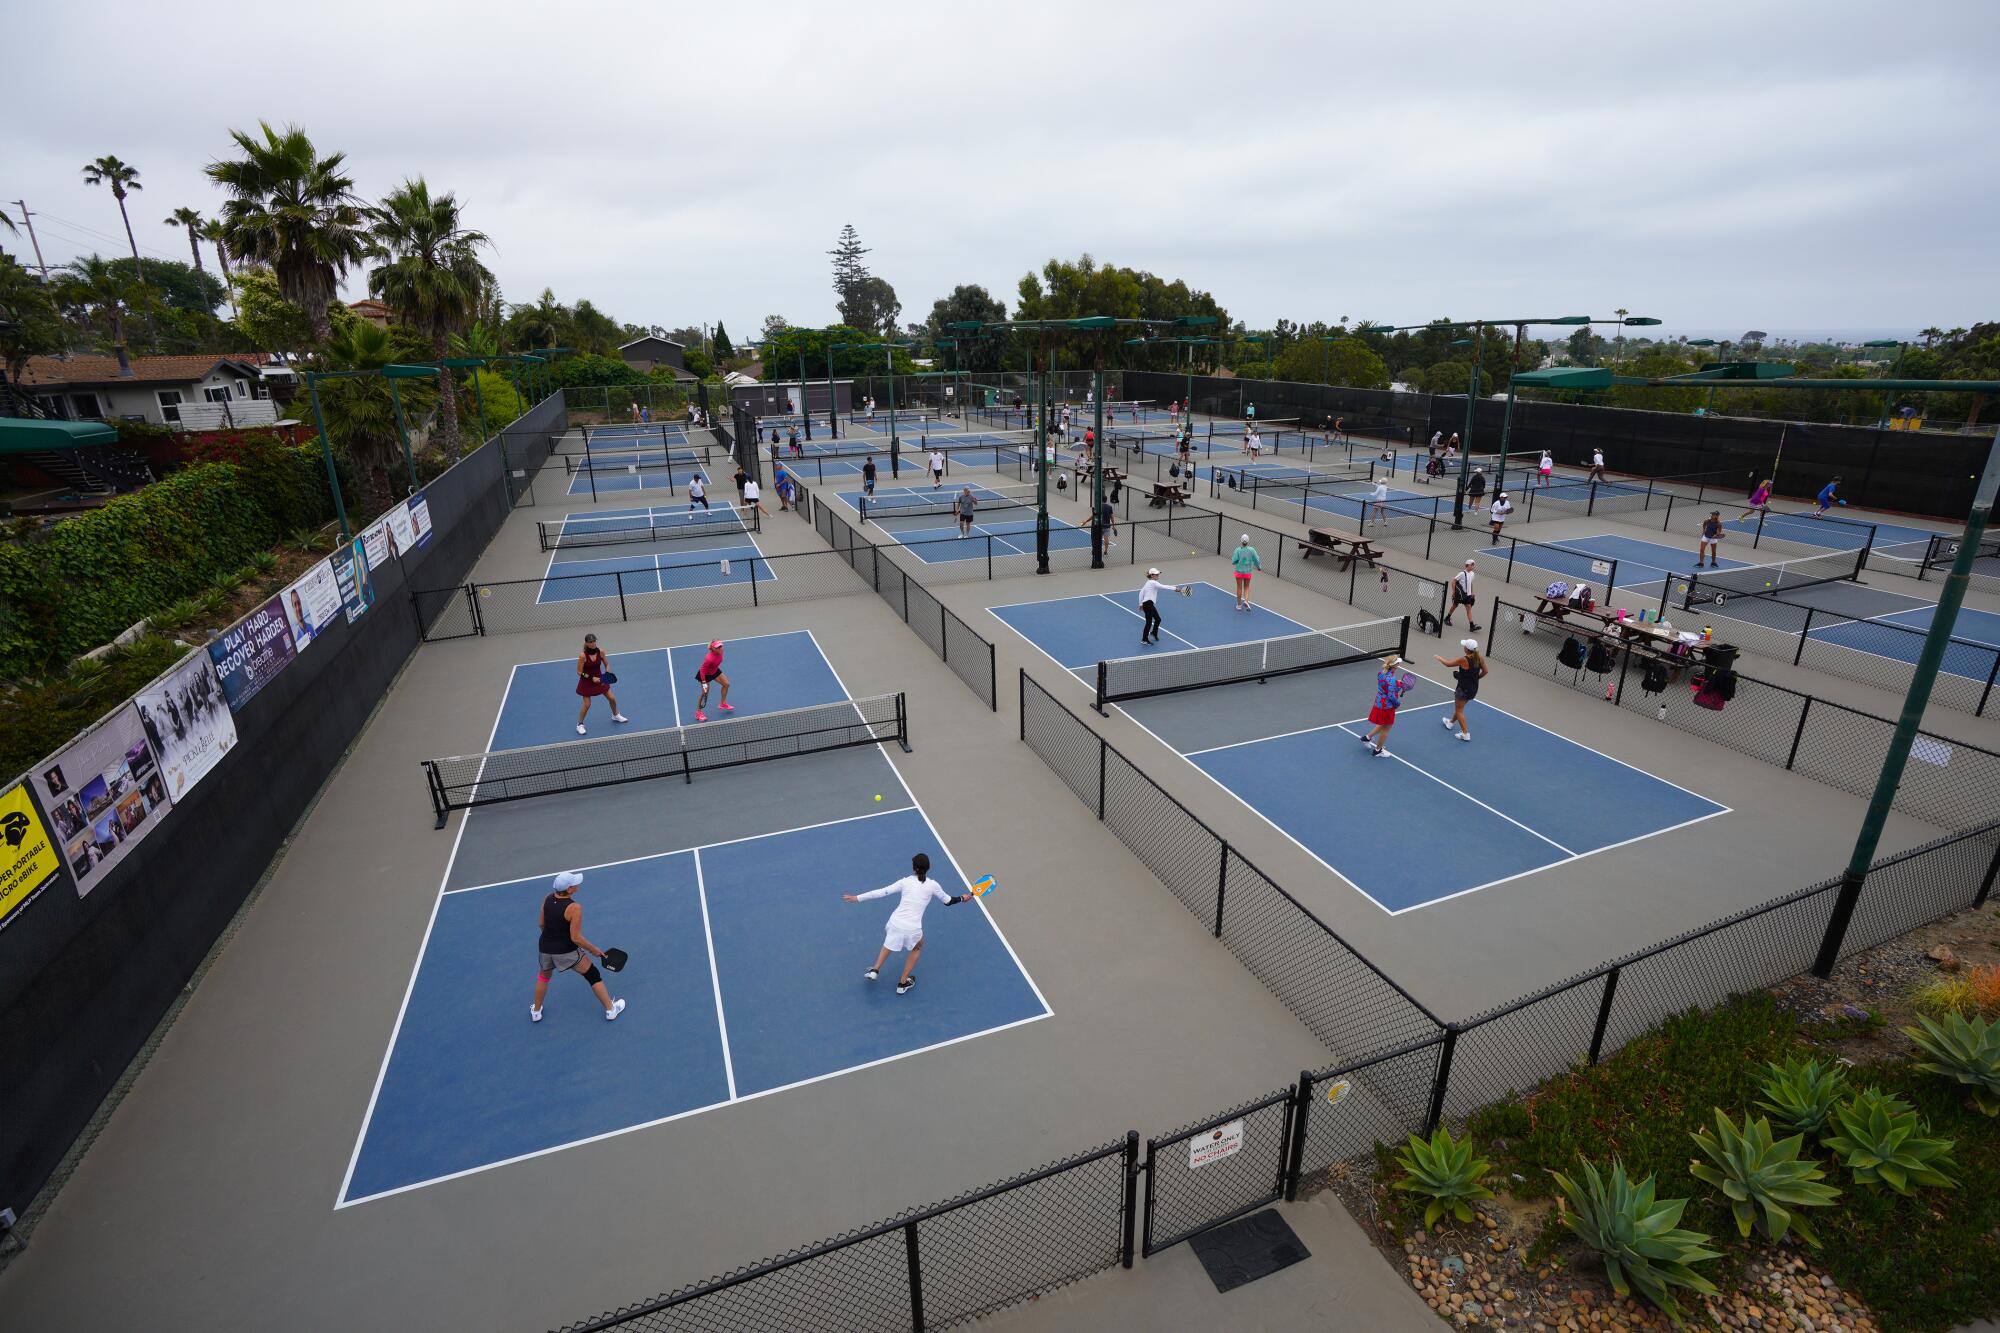 Pickleball invades San Diego tennis clubs, resorts, malls - The